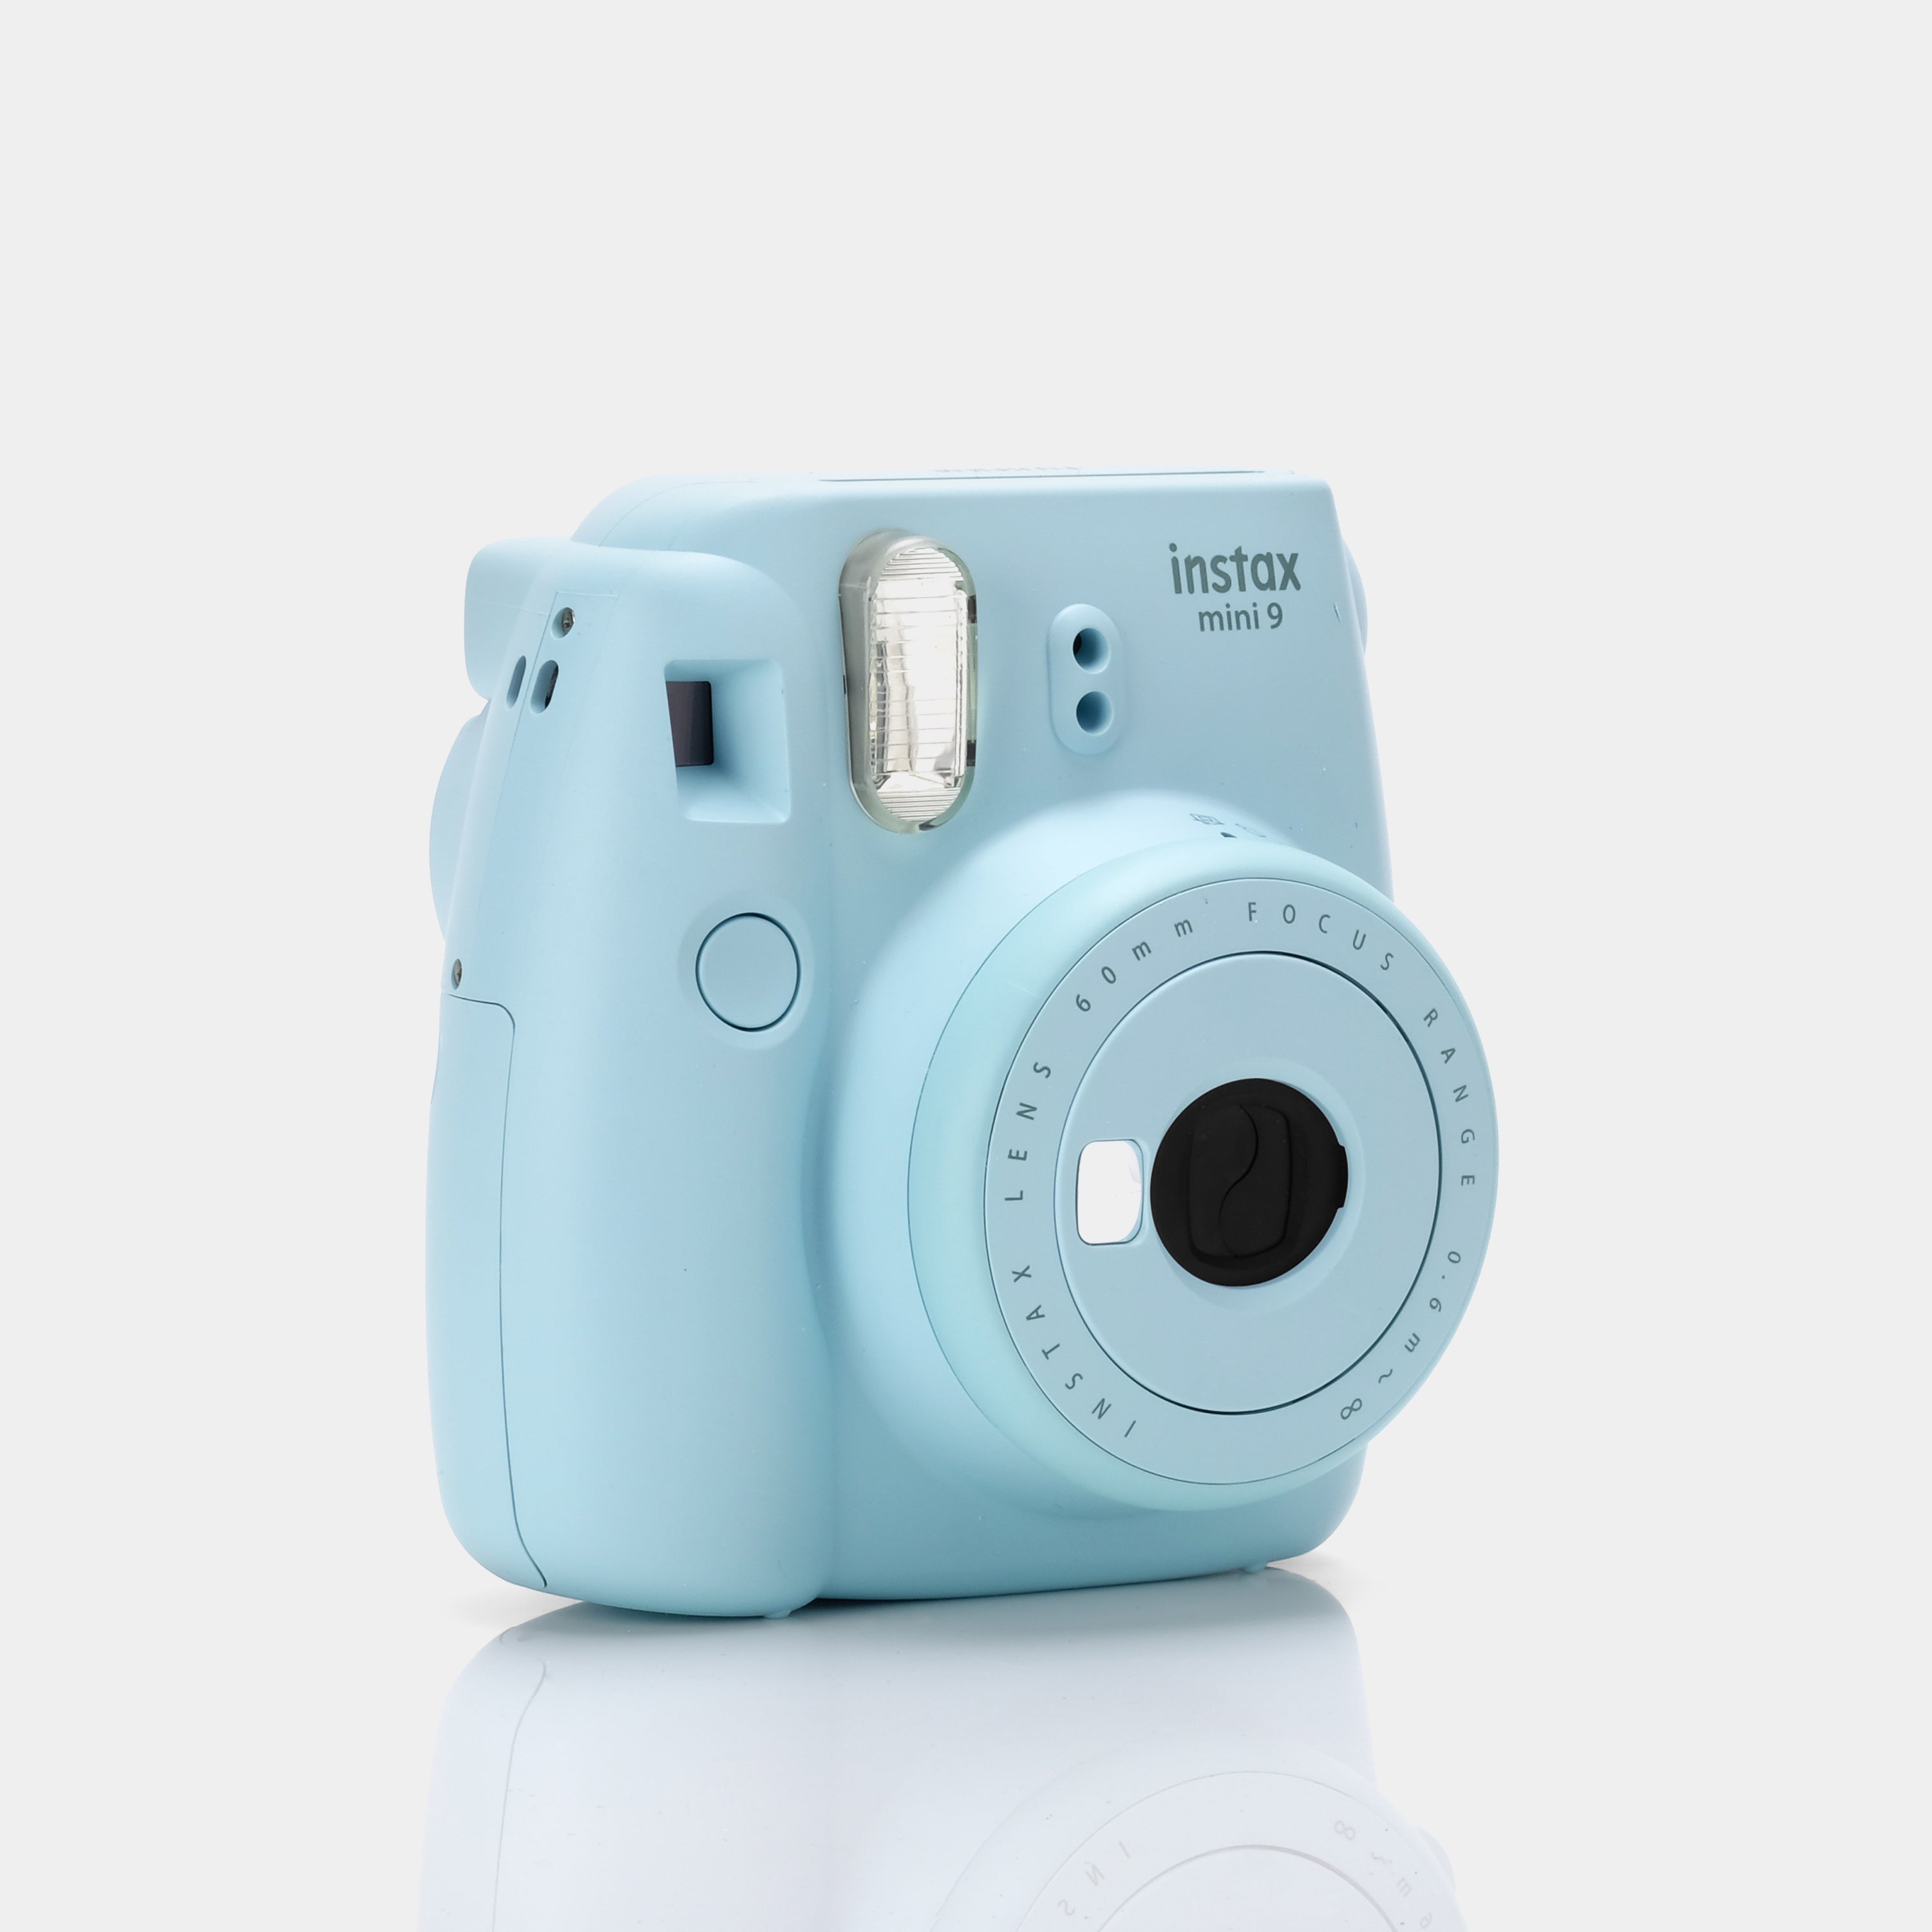 Fujifilm Instax Mini 9 Blue Instant Film Camera With Blue Bag - Refurbished